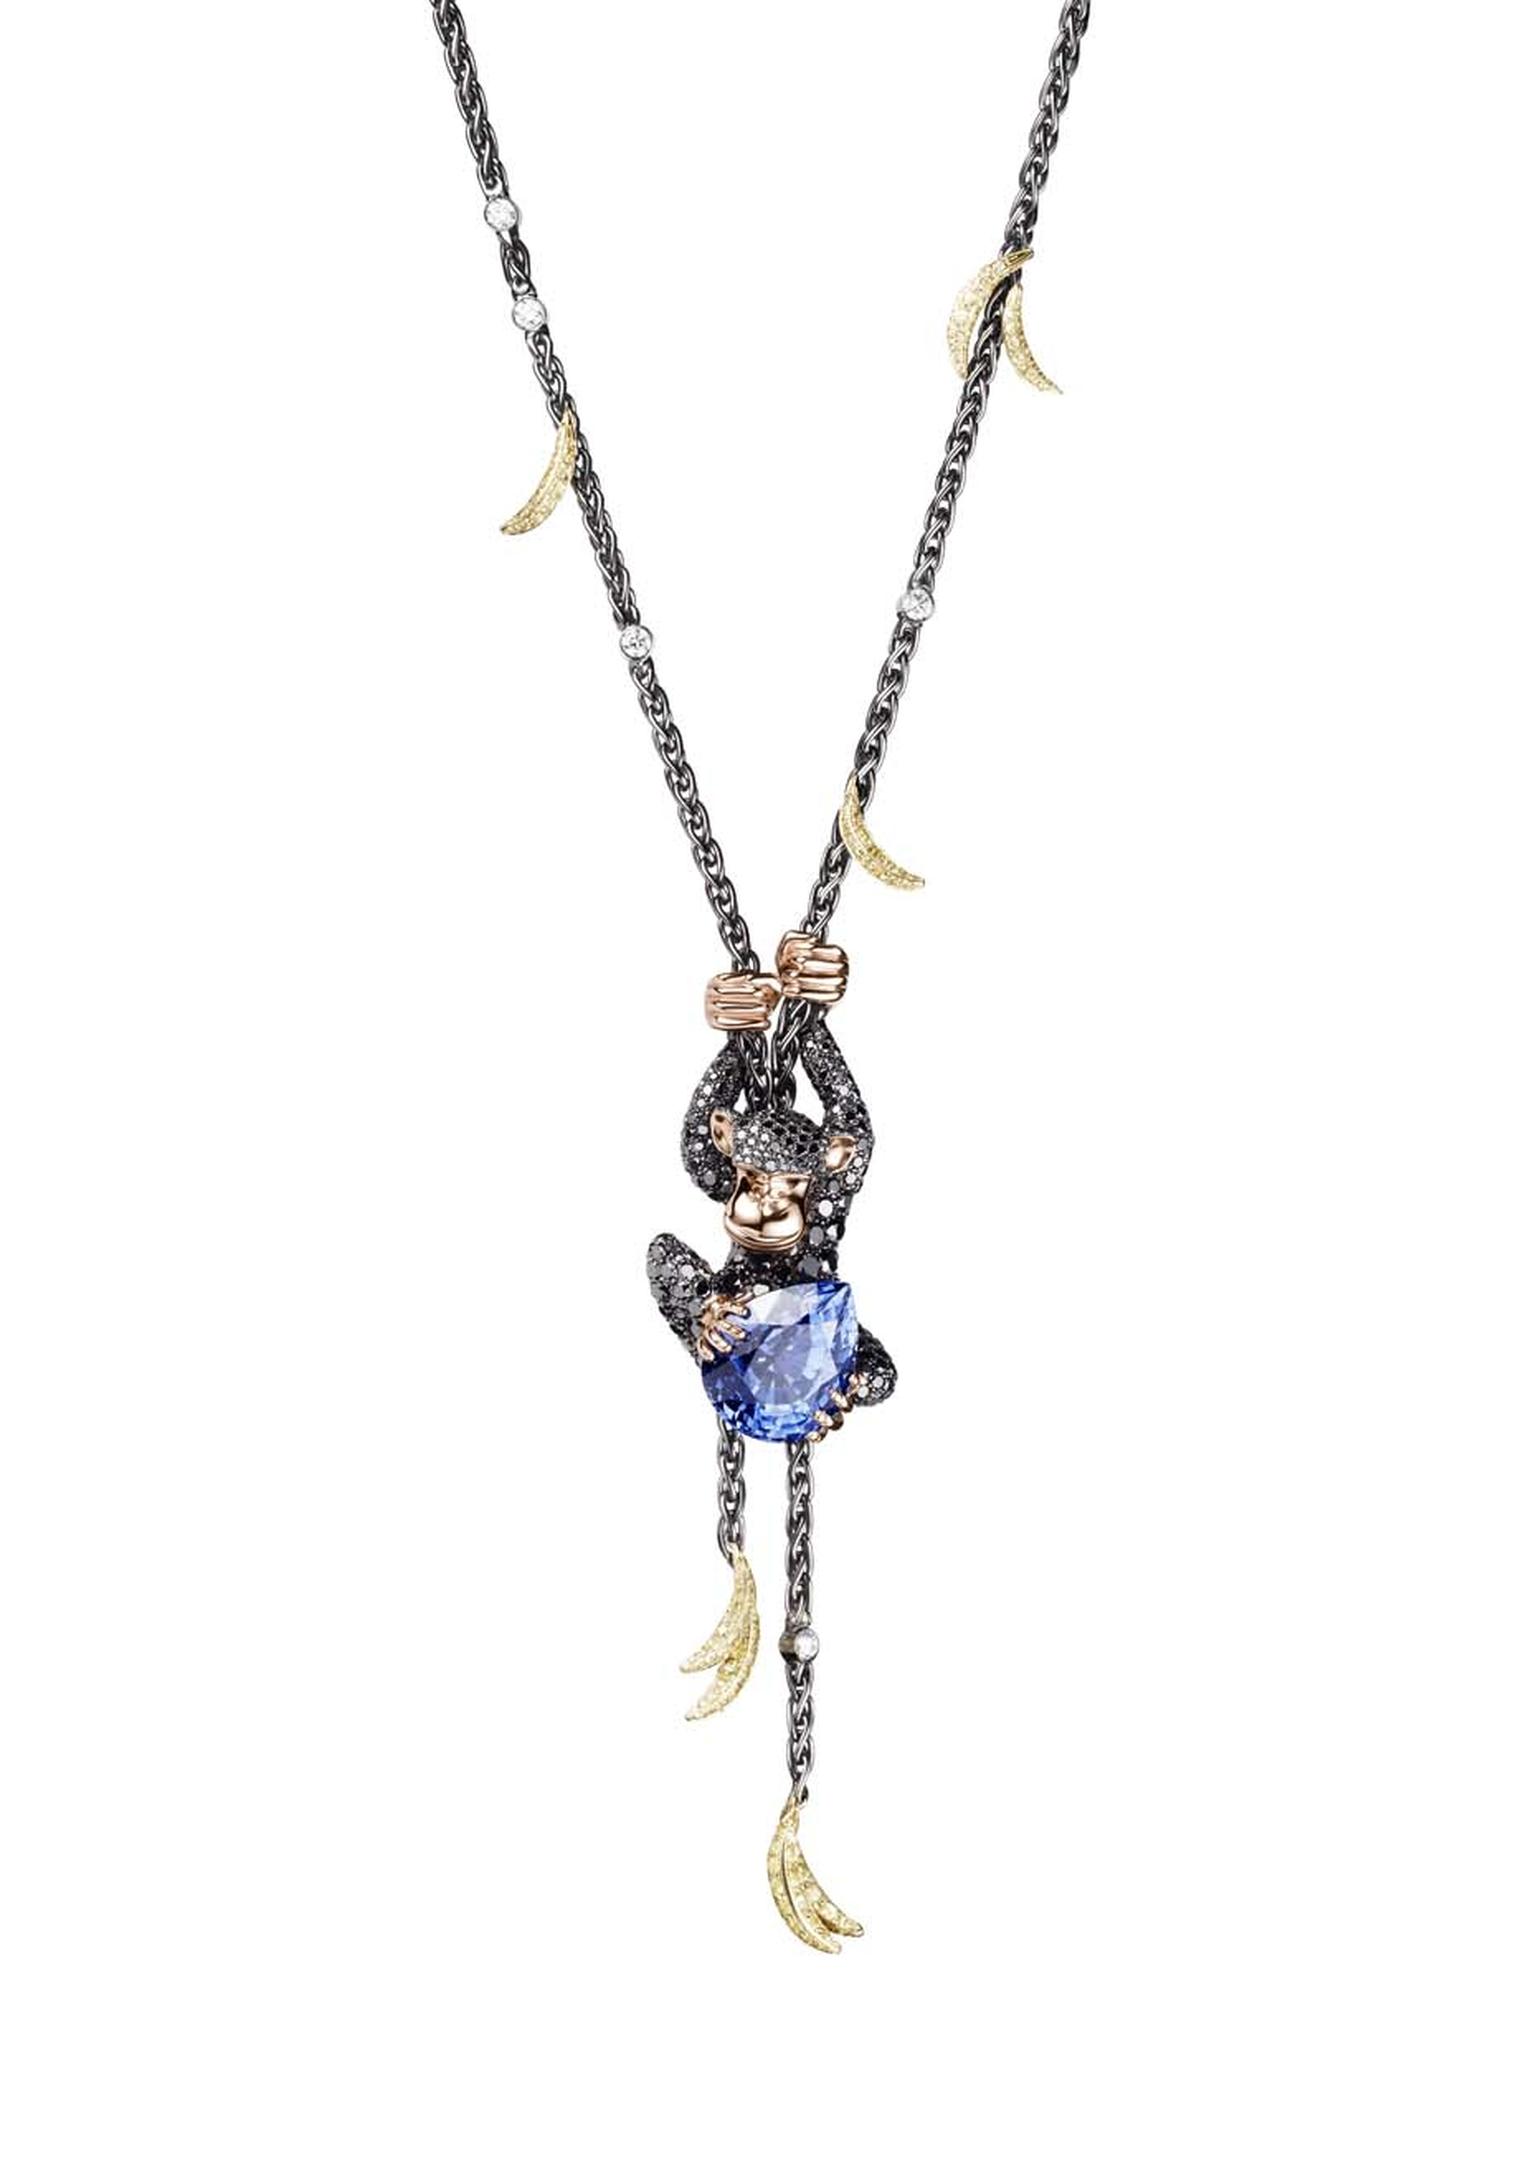 The de GRISOGONO Chimpanzee necklace, set with 771 black diamonds, 247 yellow sapphires, white diamonds and a pear-cut blue sapphire, worn by Cara Delevingne to de GRISOGONO's Eden Roc party